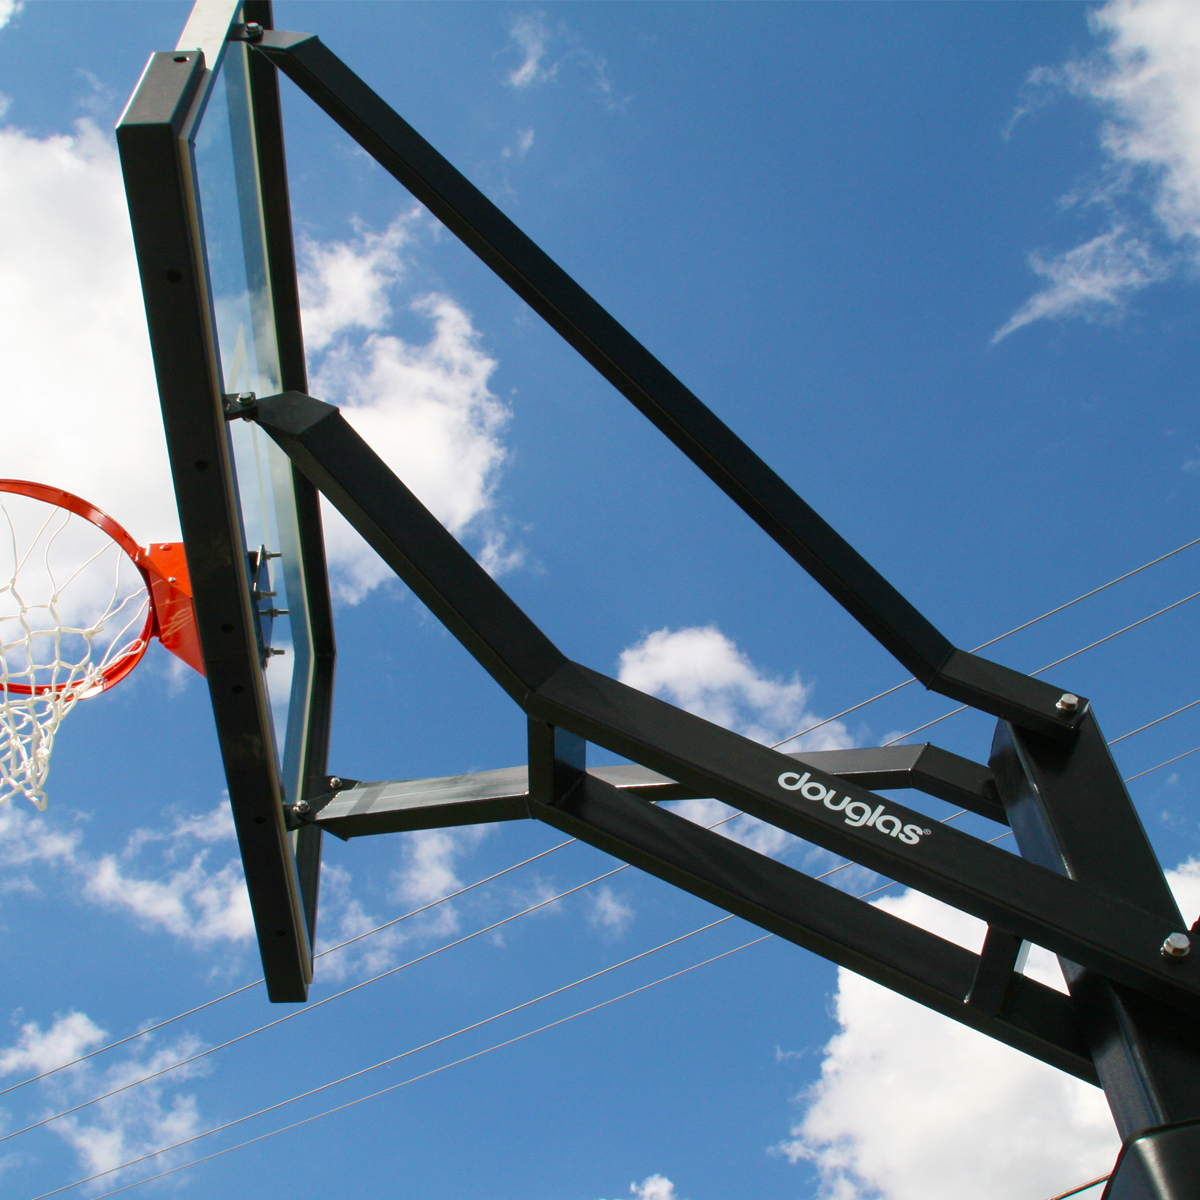 Douglas® F5™ 655 STEEL Basketball System